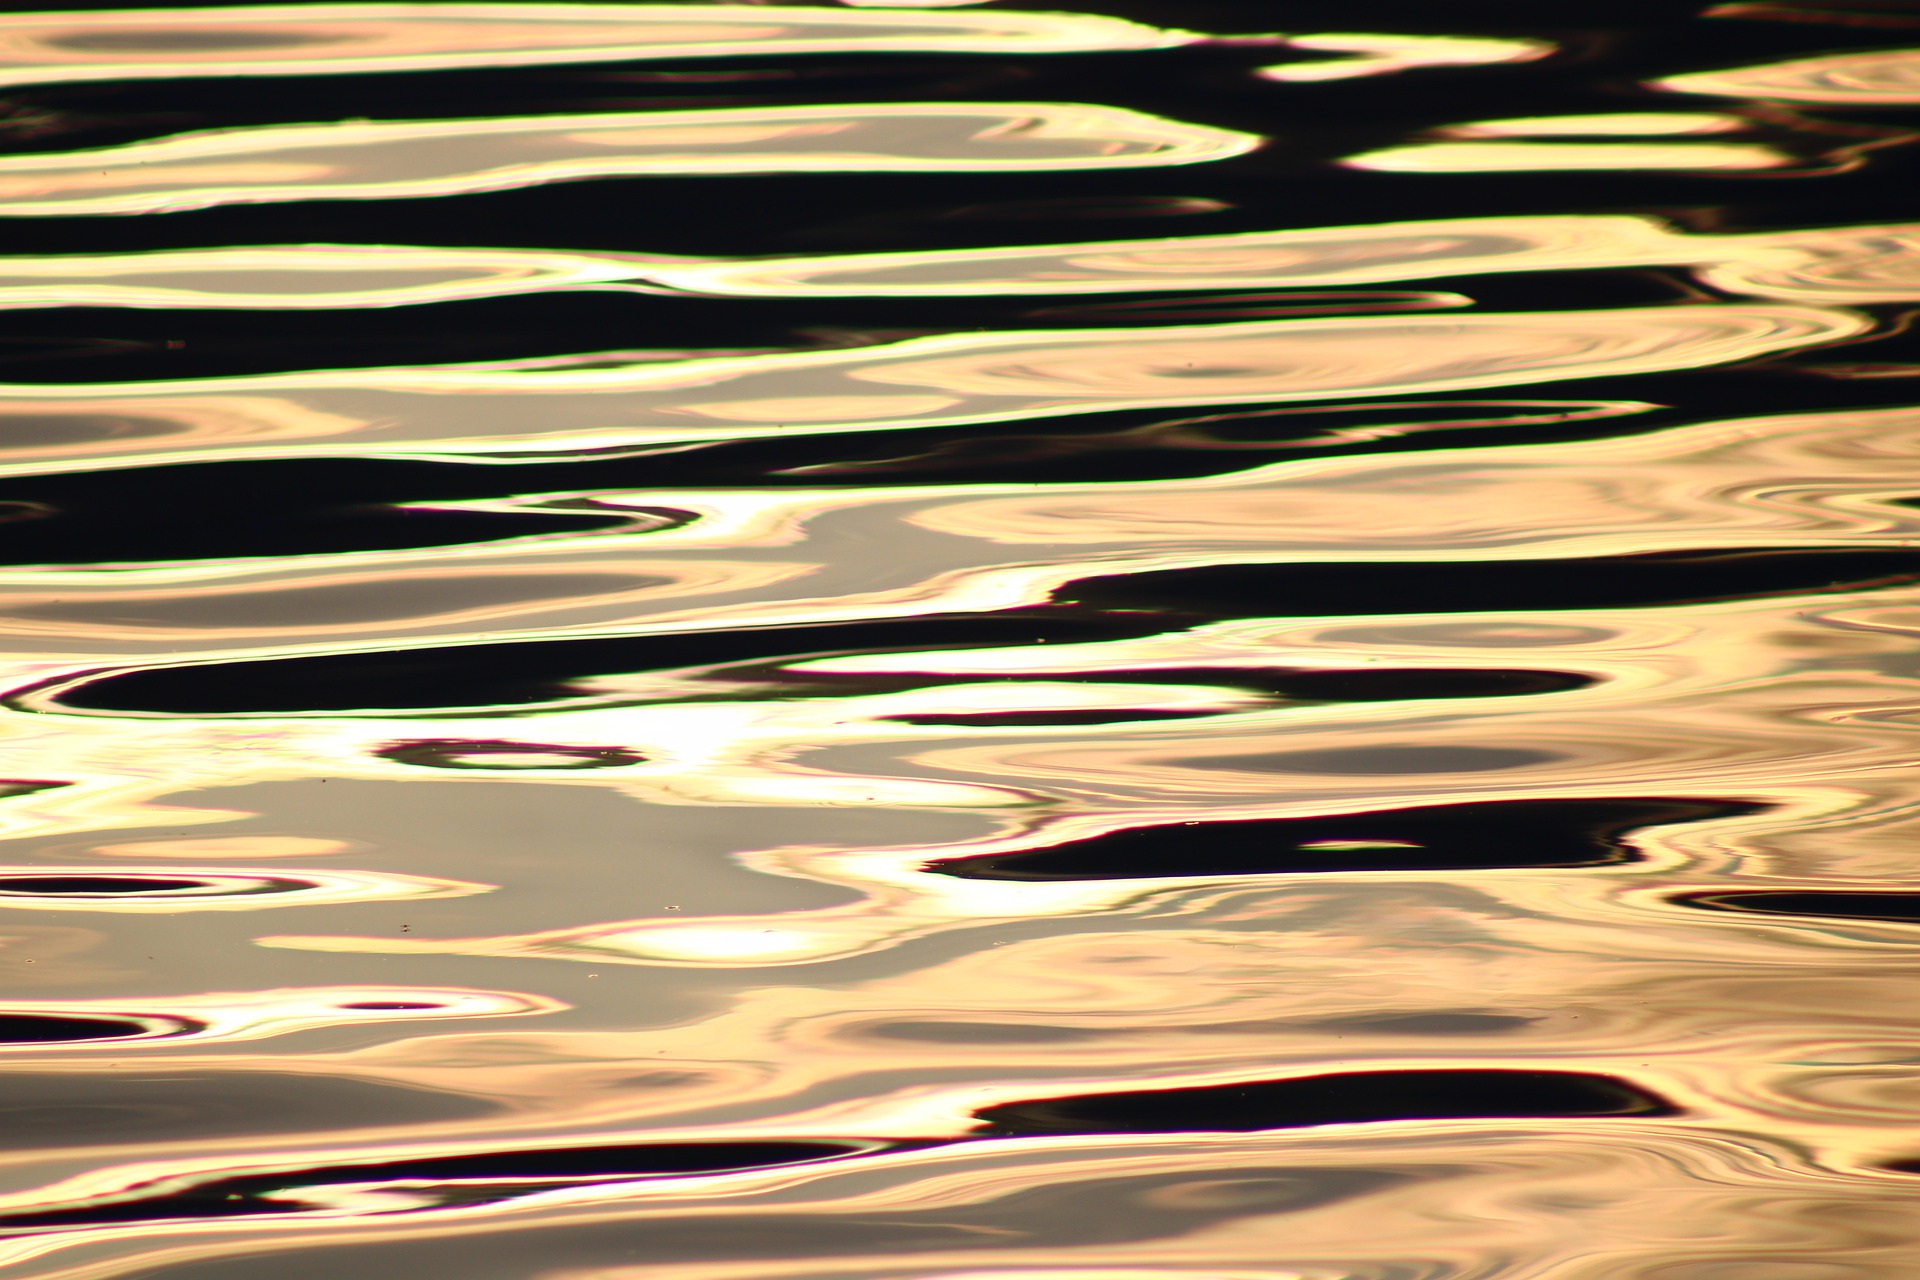 water reflecting like gold